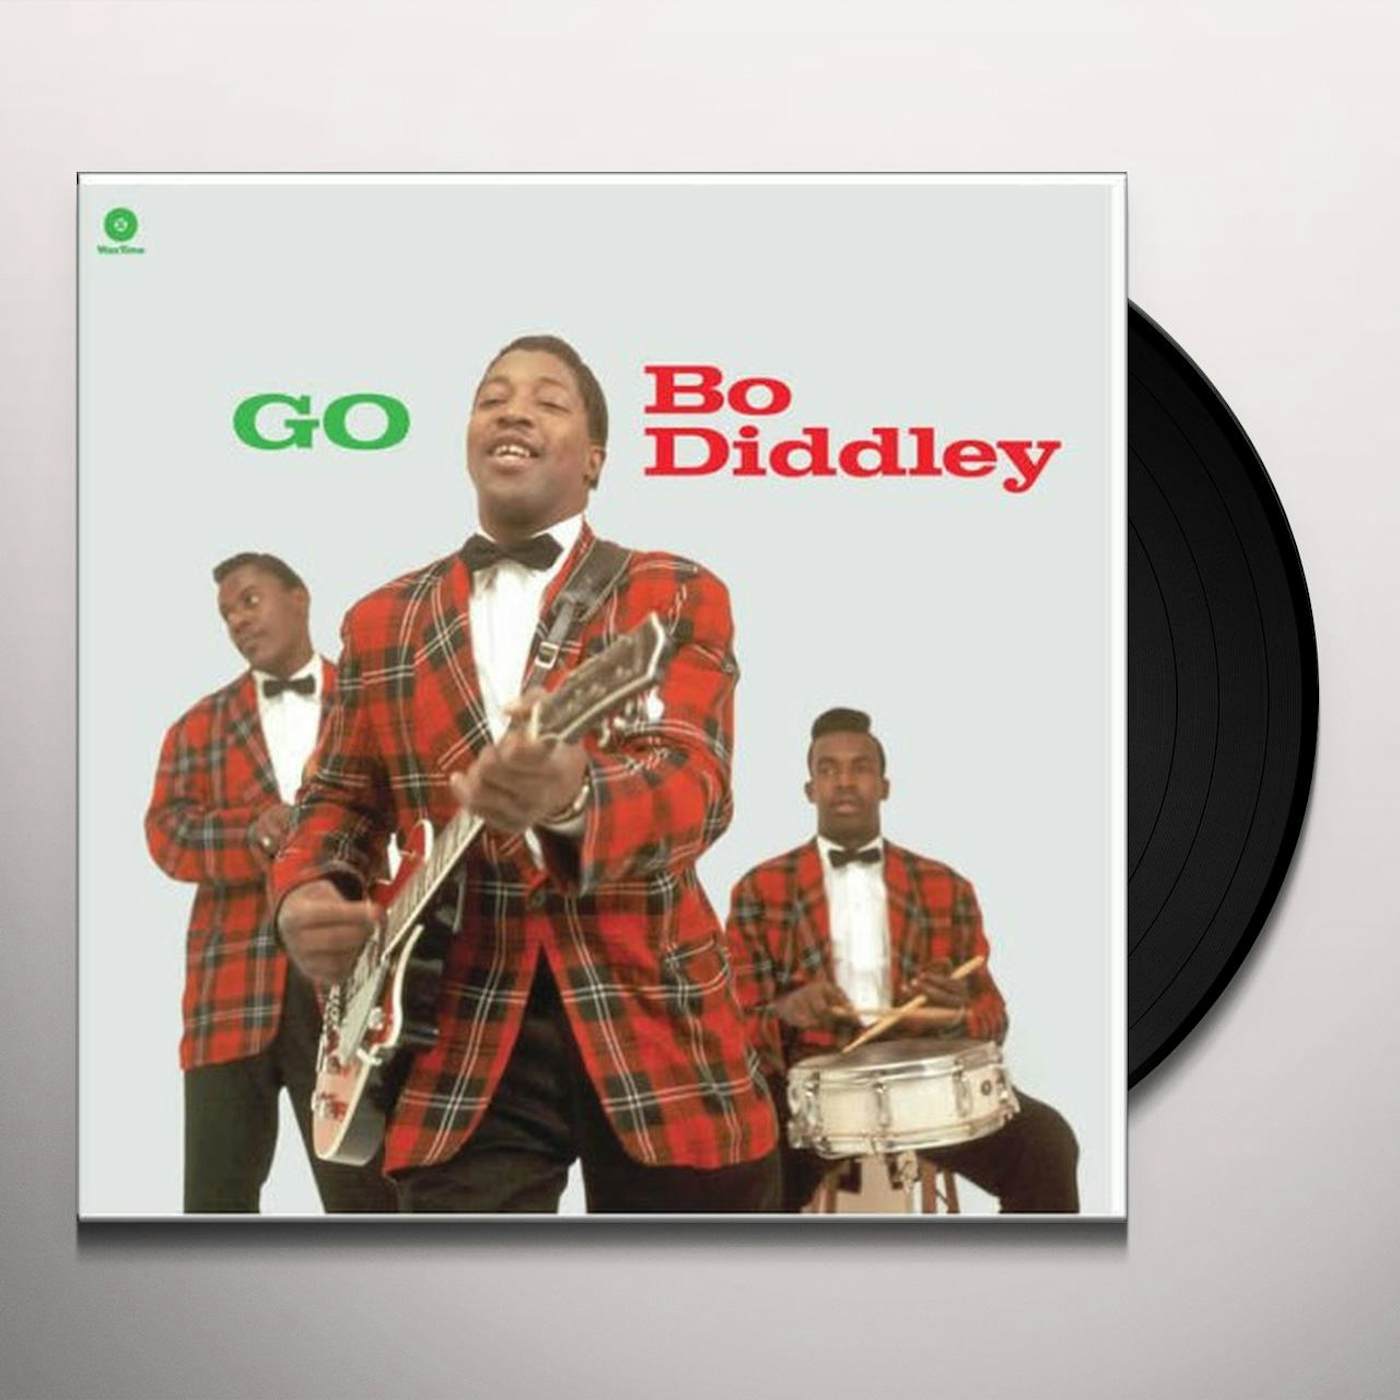 GO BO DIDDLEY Vinyl Record - 180 Gram Pressing